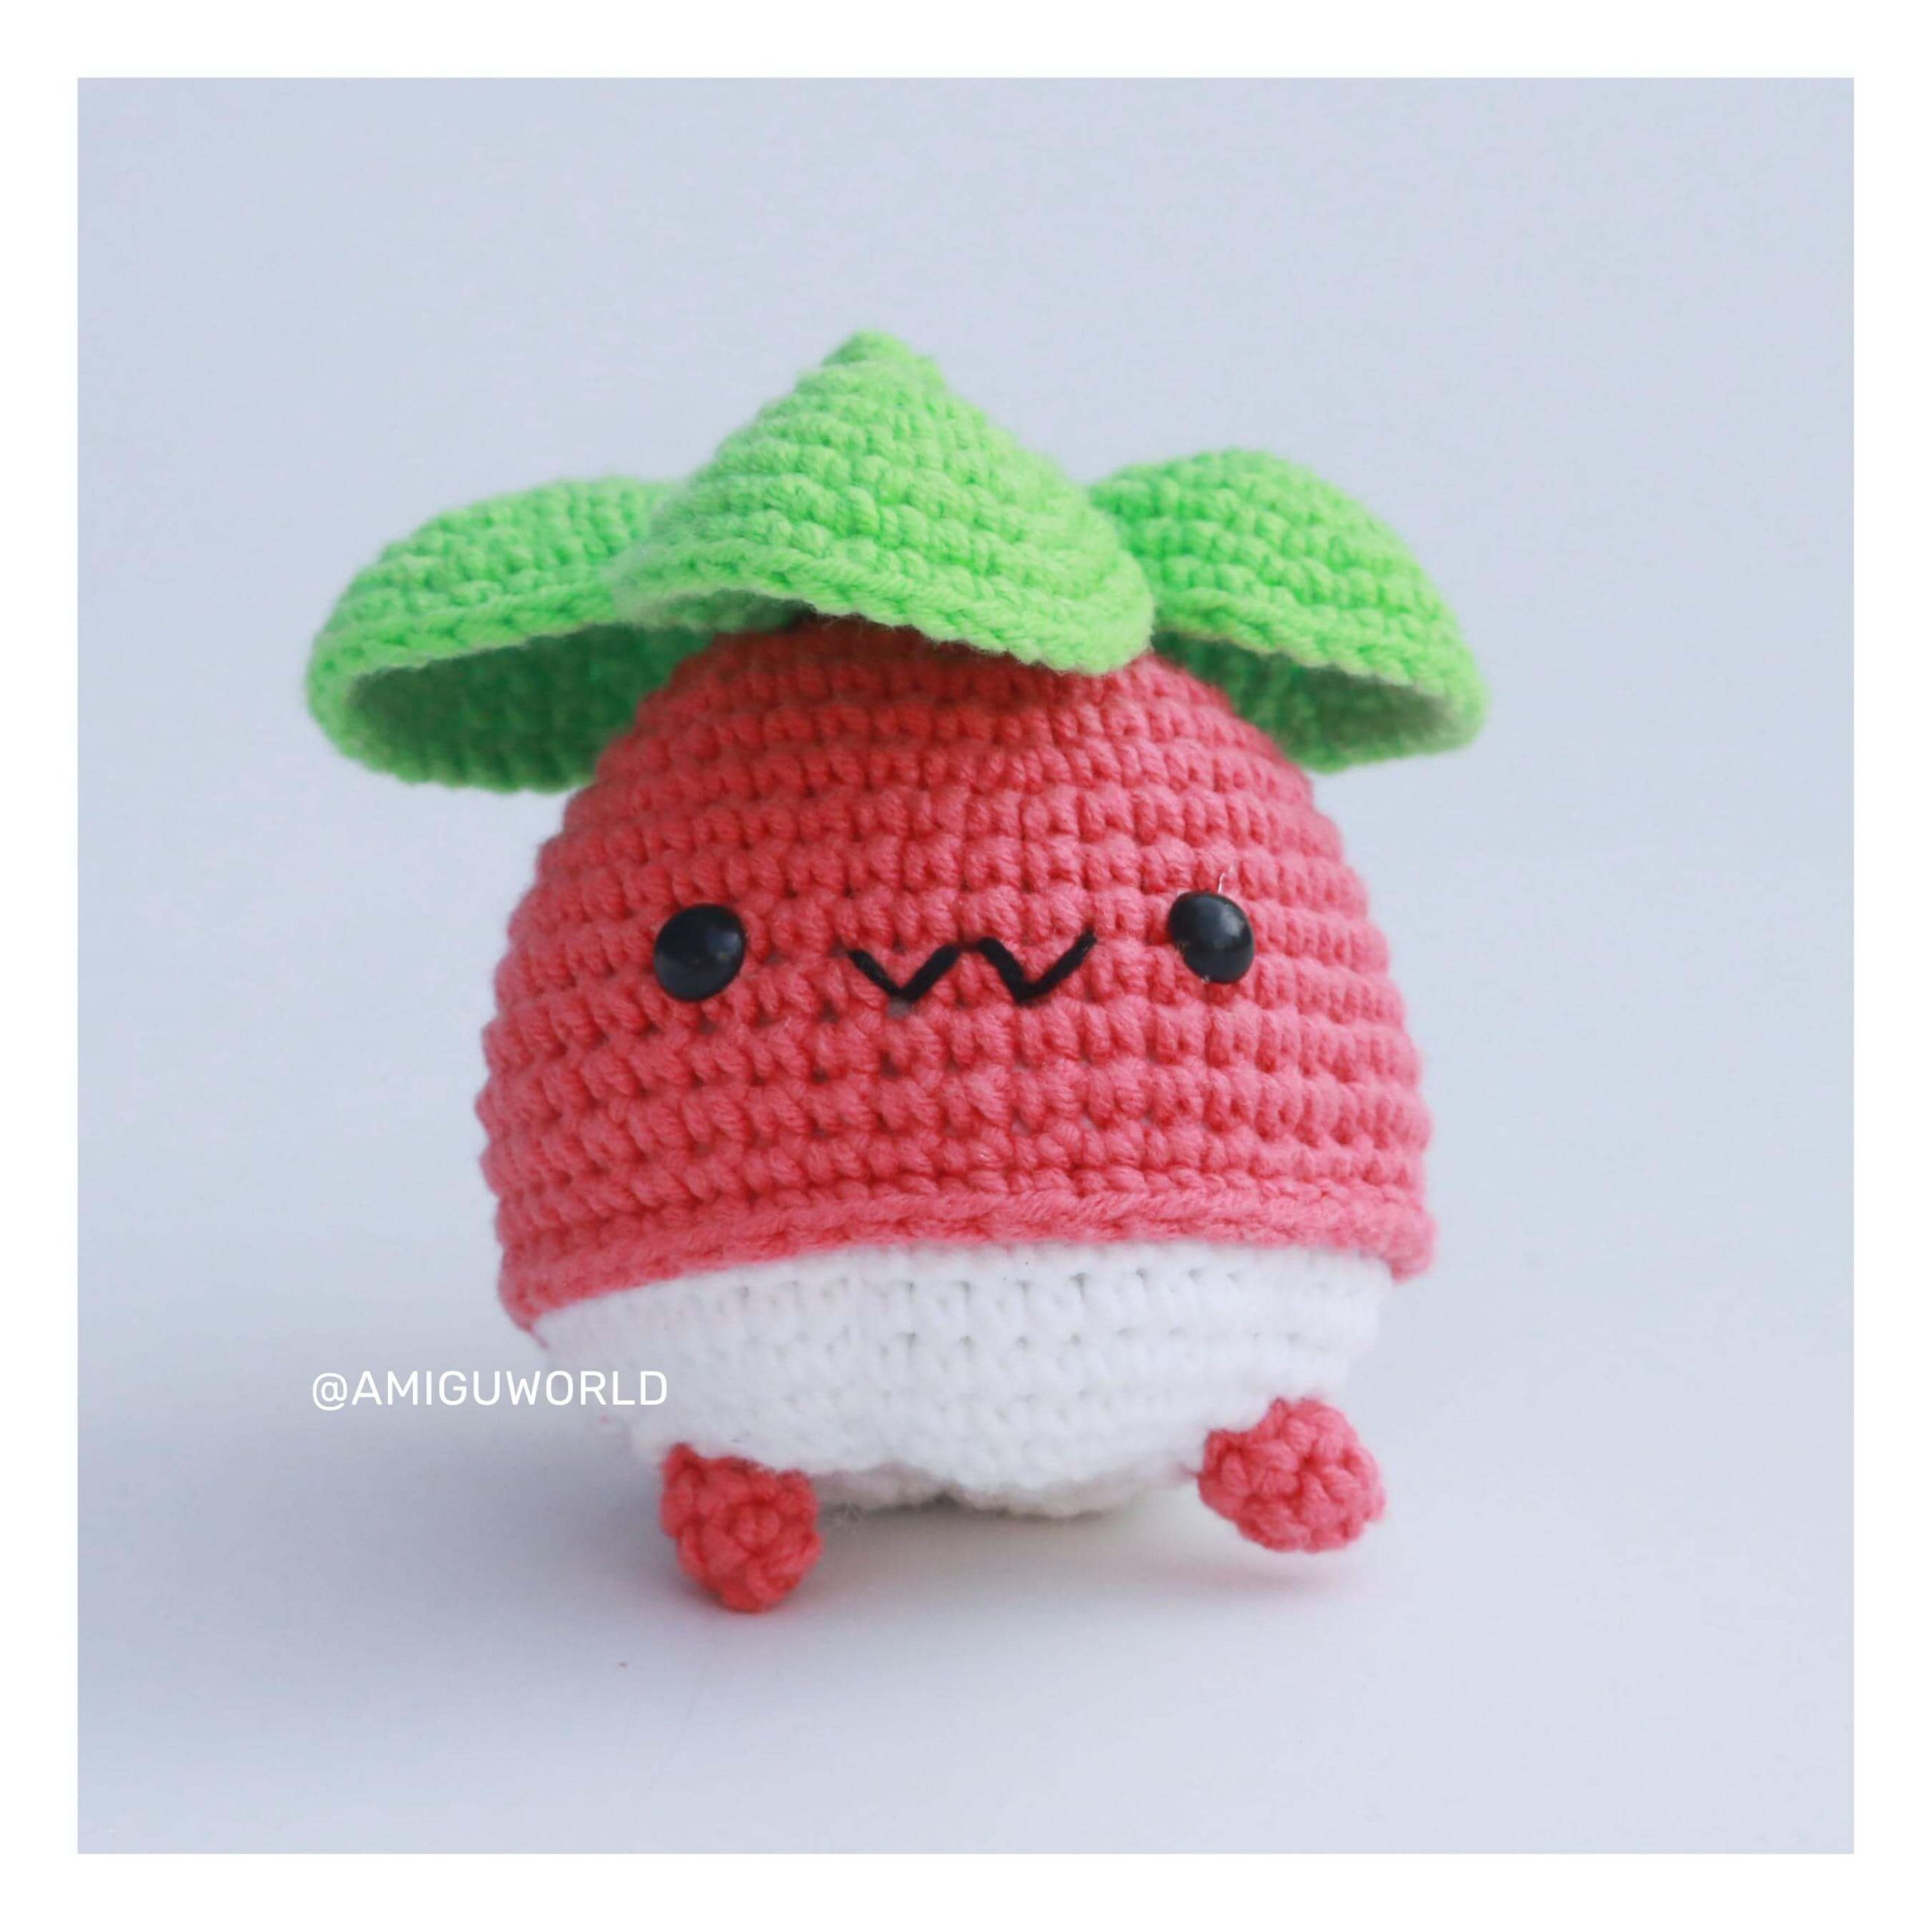 Amakaji-amigurumi-crochet-pattern-by-AmiguWorld (7)